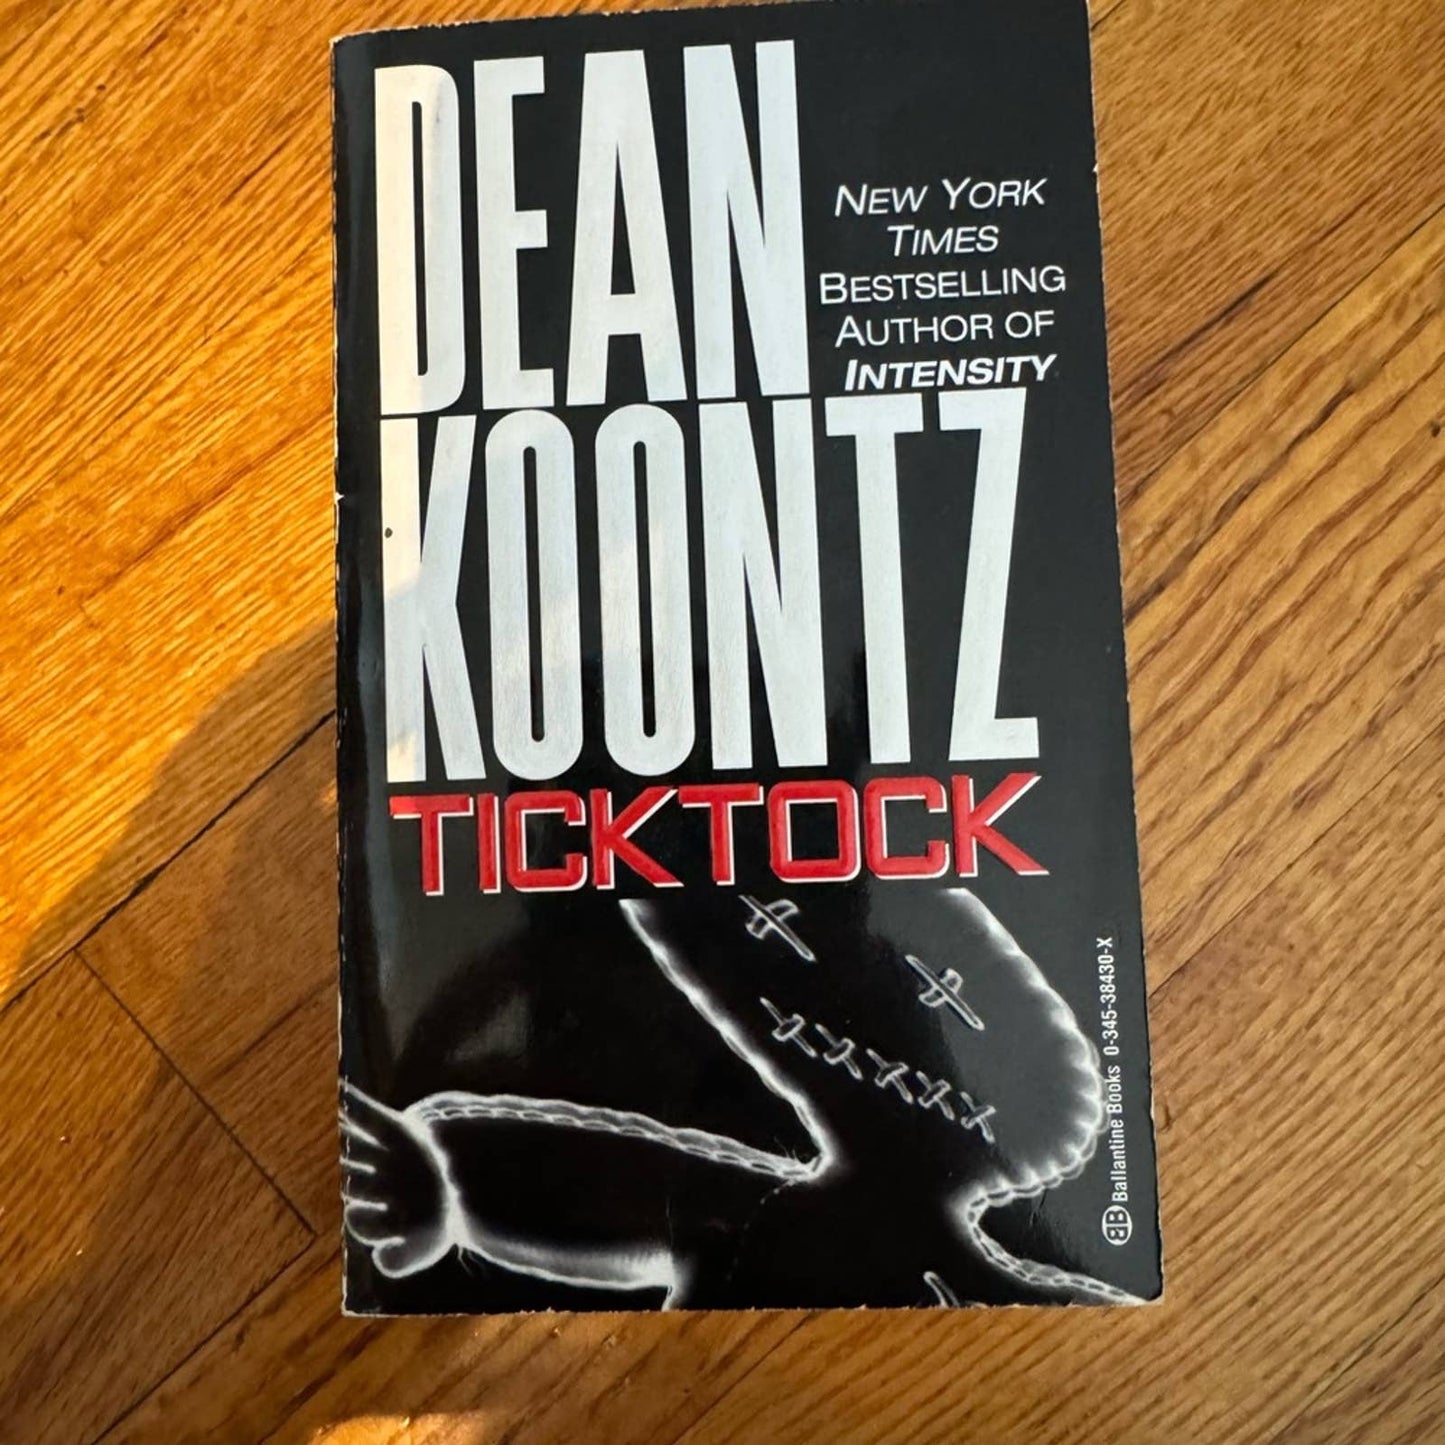 Tick Tock by Dean Koontz Paperback